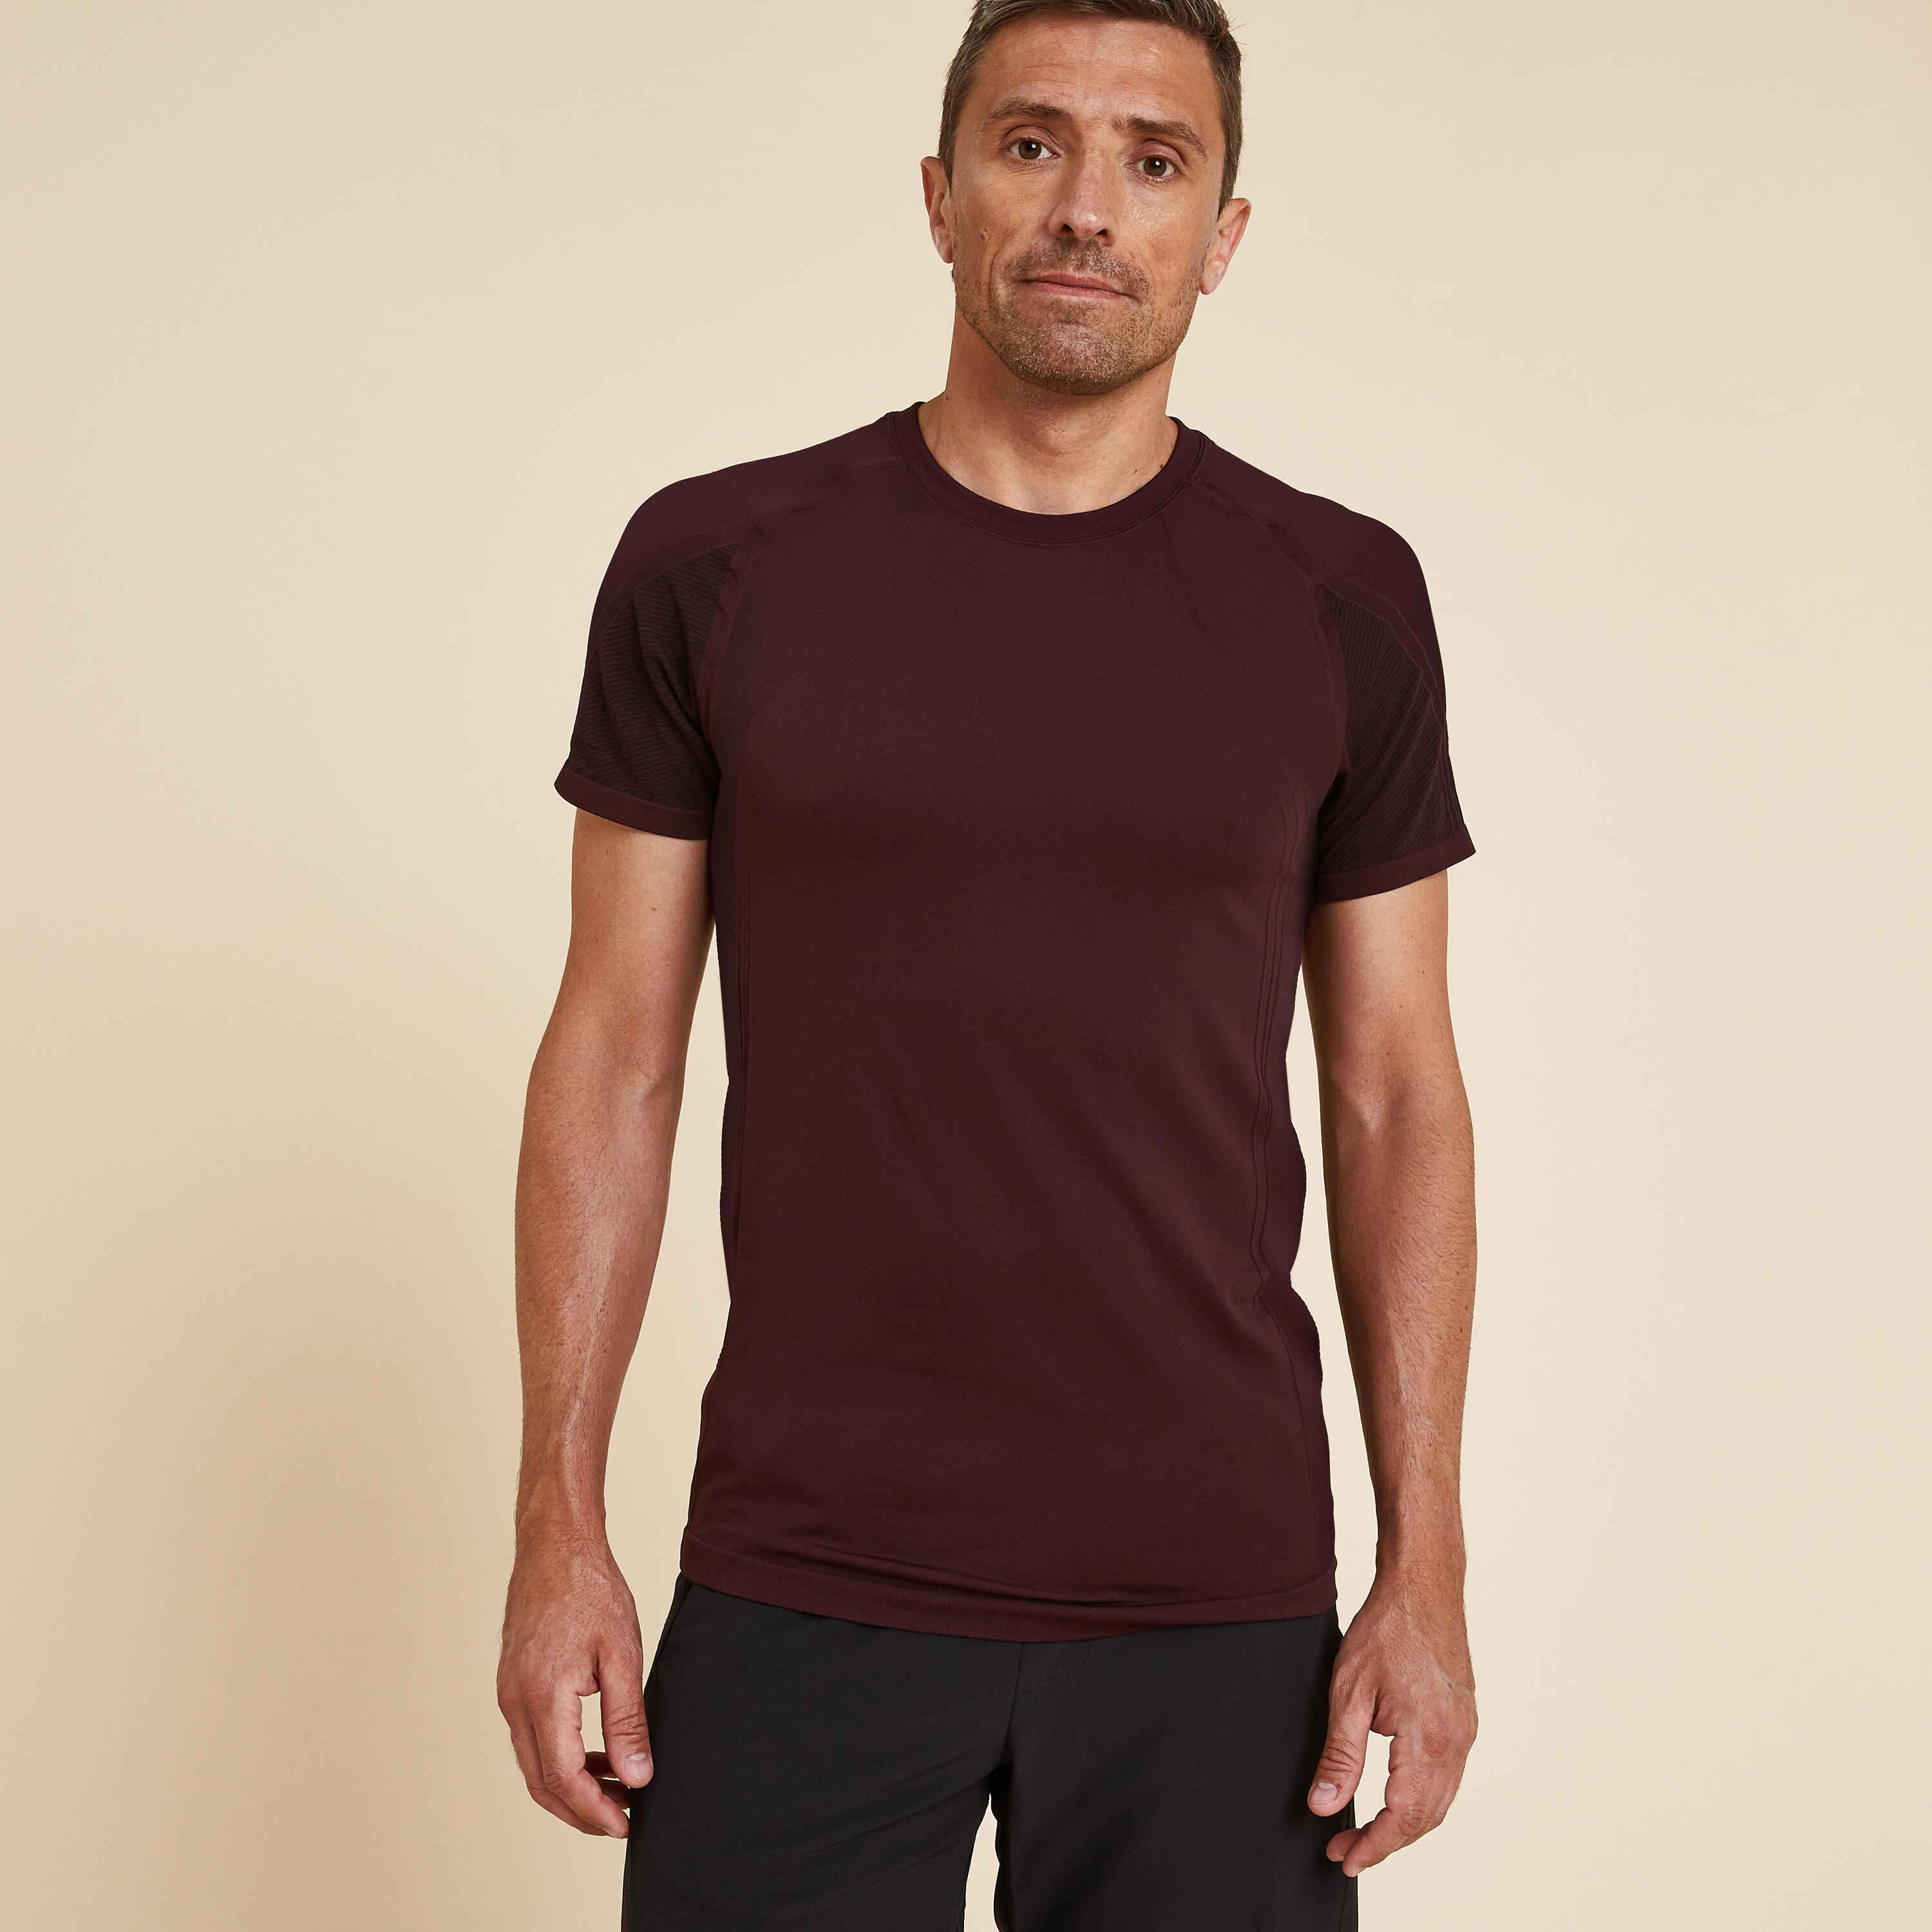 KIMJALY Men's Seamless Yoga T-Shirt Second Skin - Burgundy